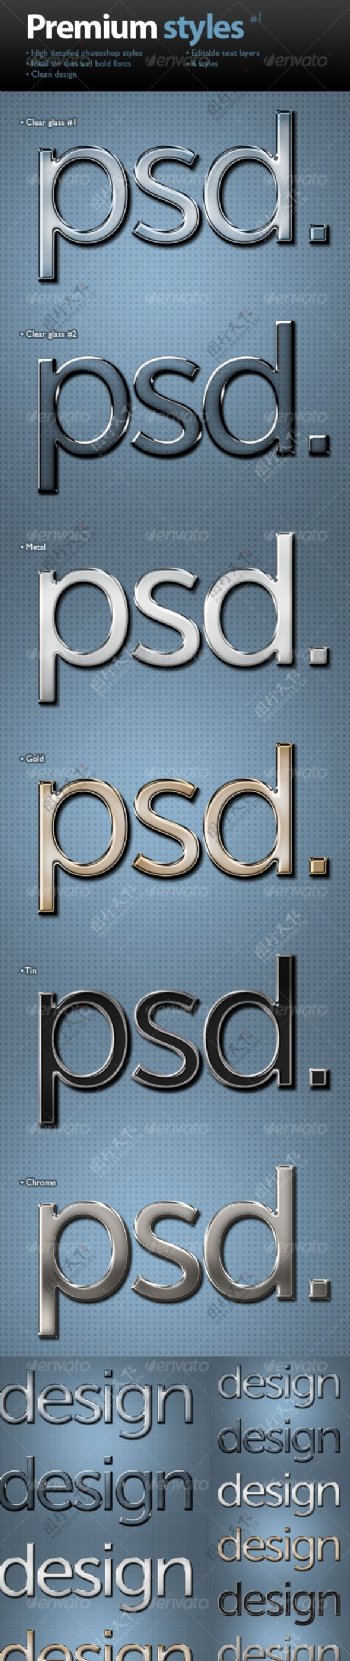 3d水晶ps文字样式图片